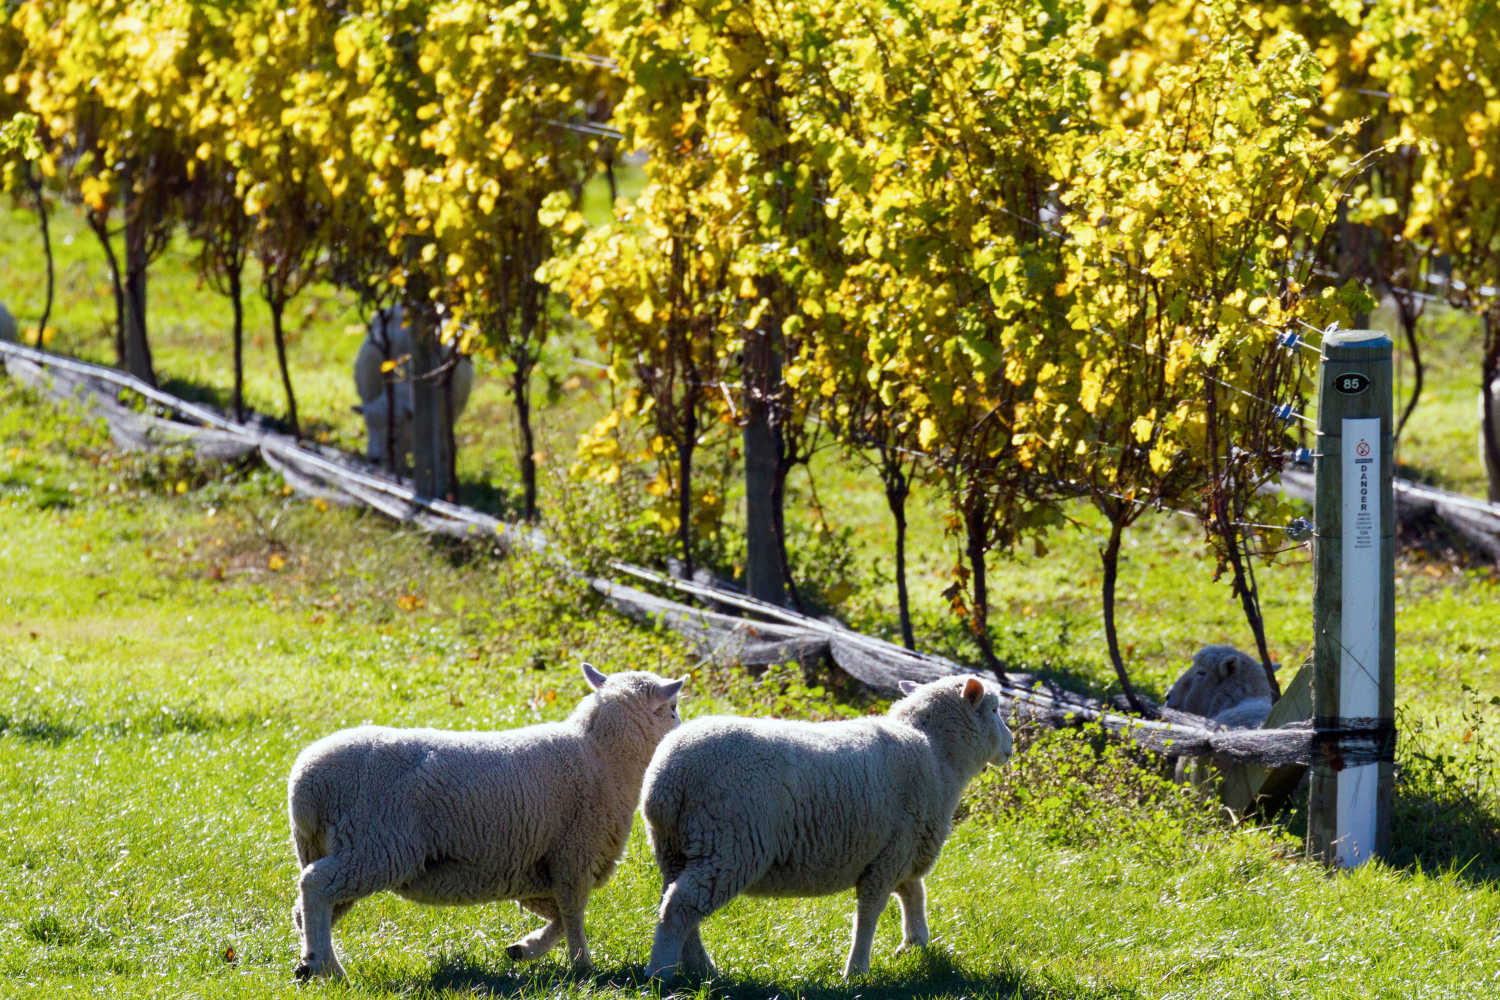 Sheep grazing in vineyard, Marlborough, New Zealand